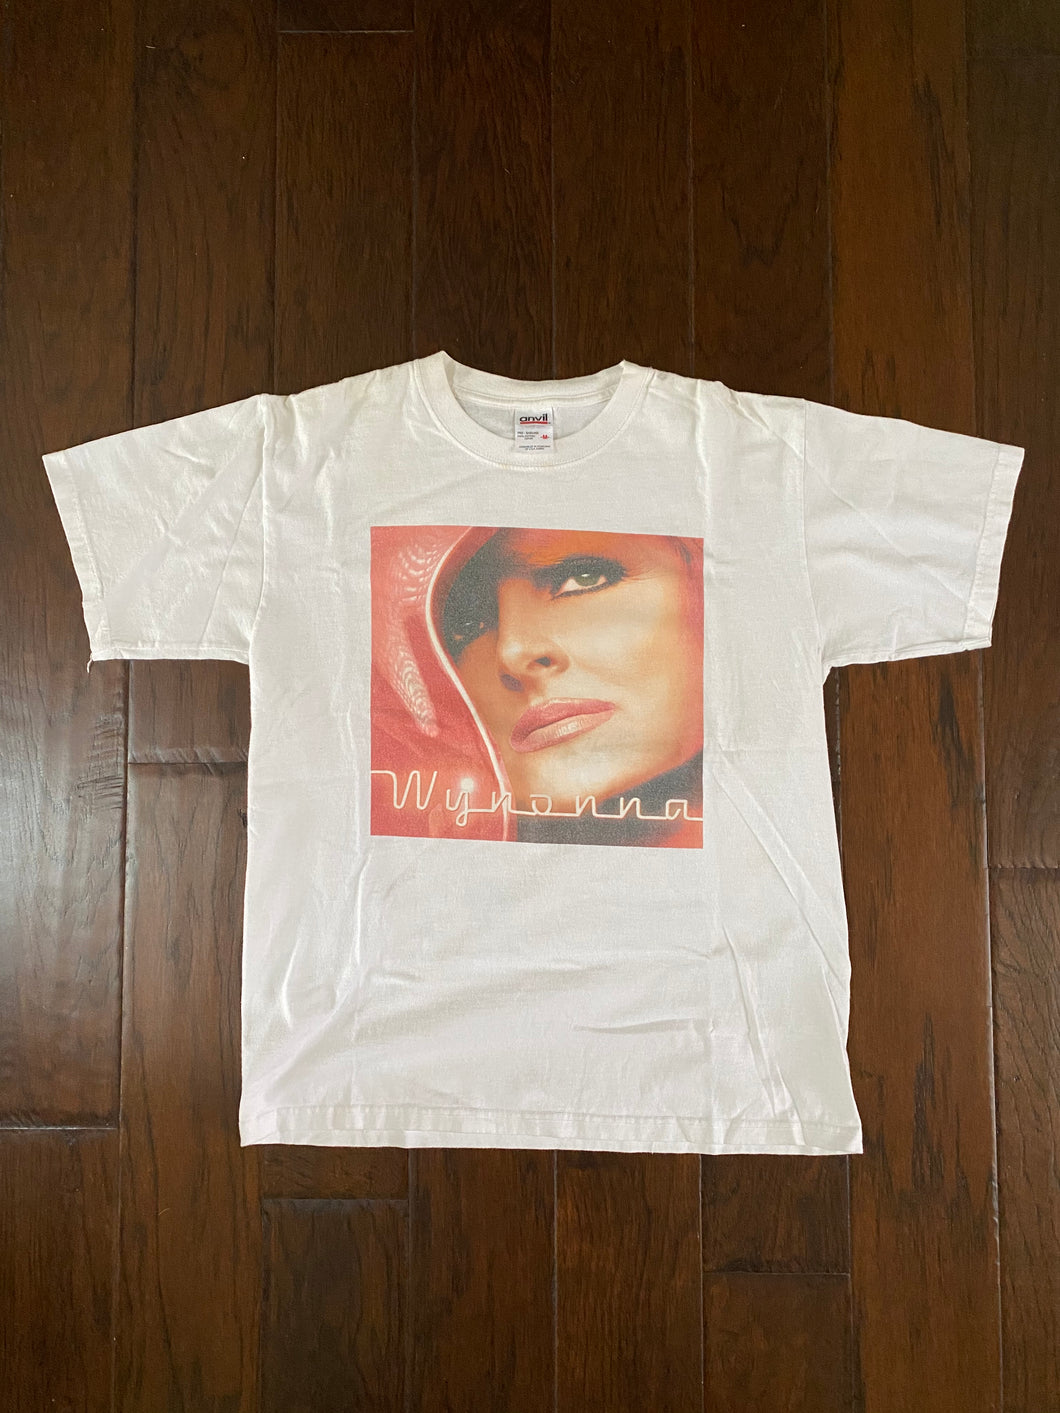 Wynonna Judd 2003 Vintage Distressed Tour T-shirt